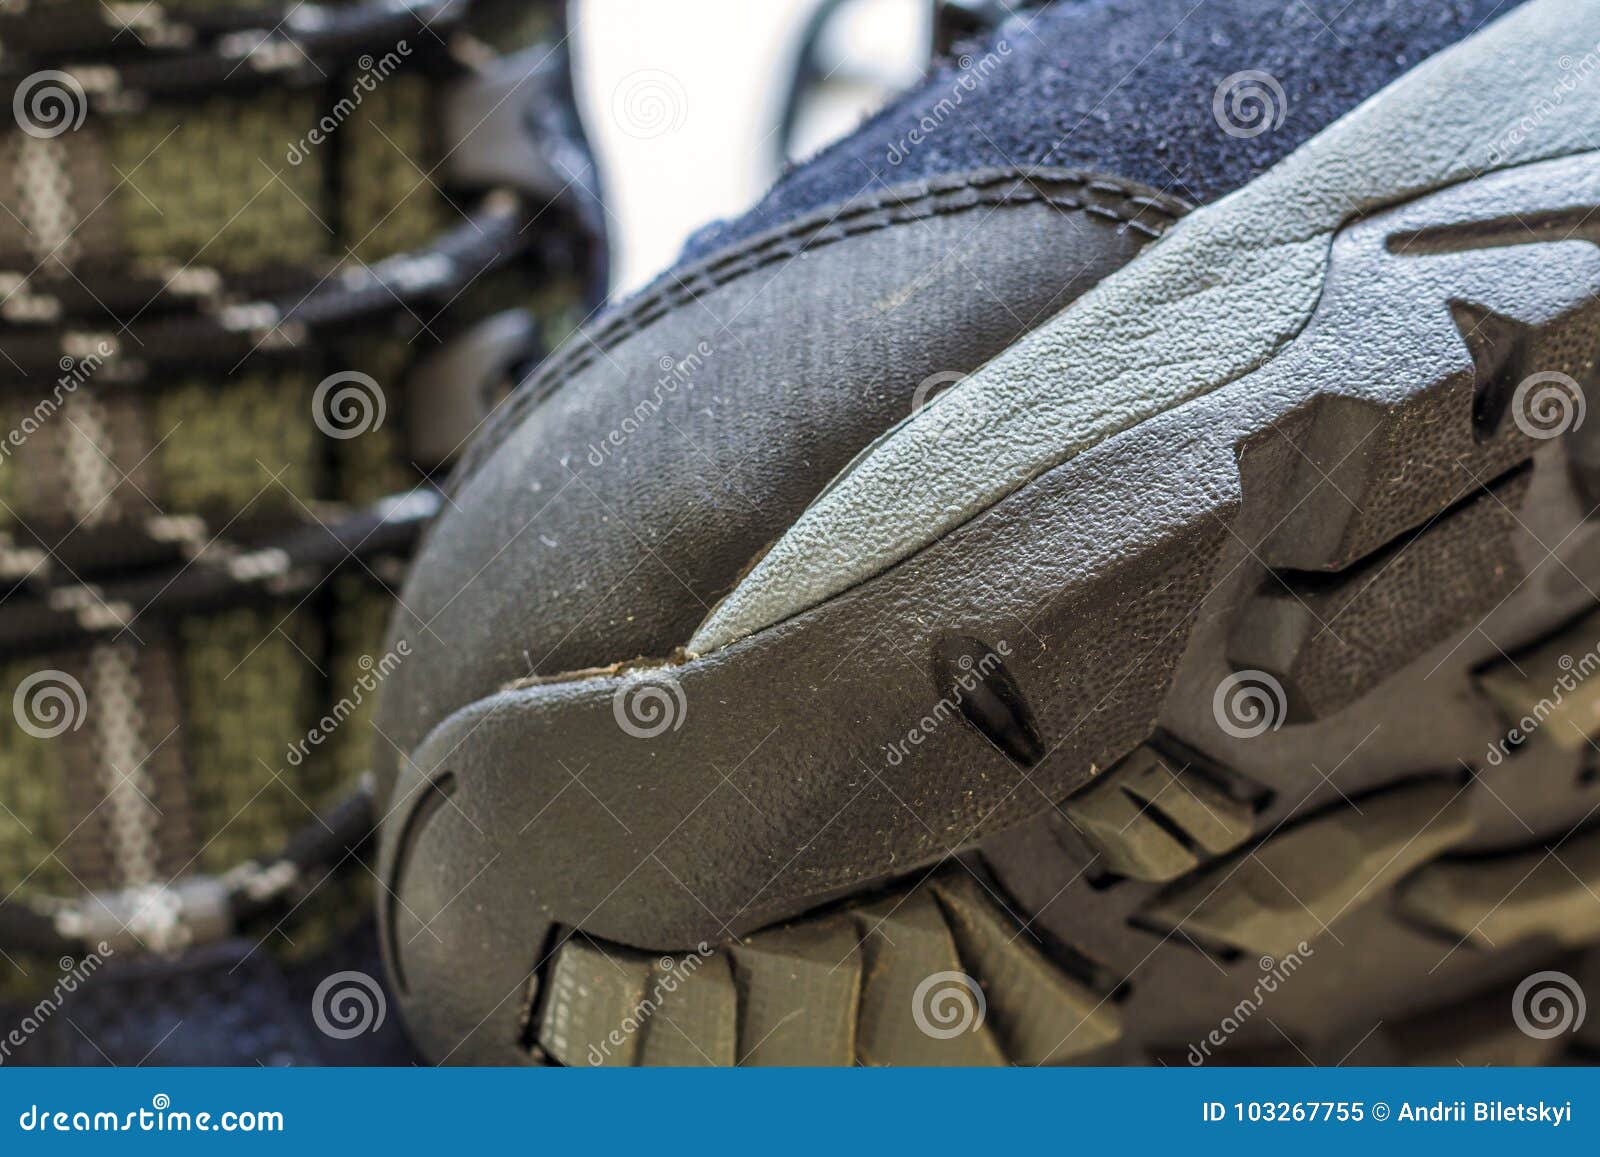 Detail Shot of Fragmrnt of New Fashionable Hiking Mountain Boot. Stock ...